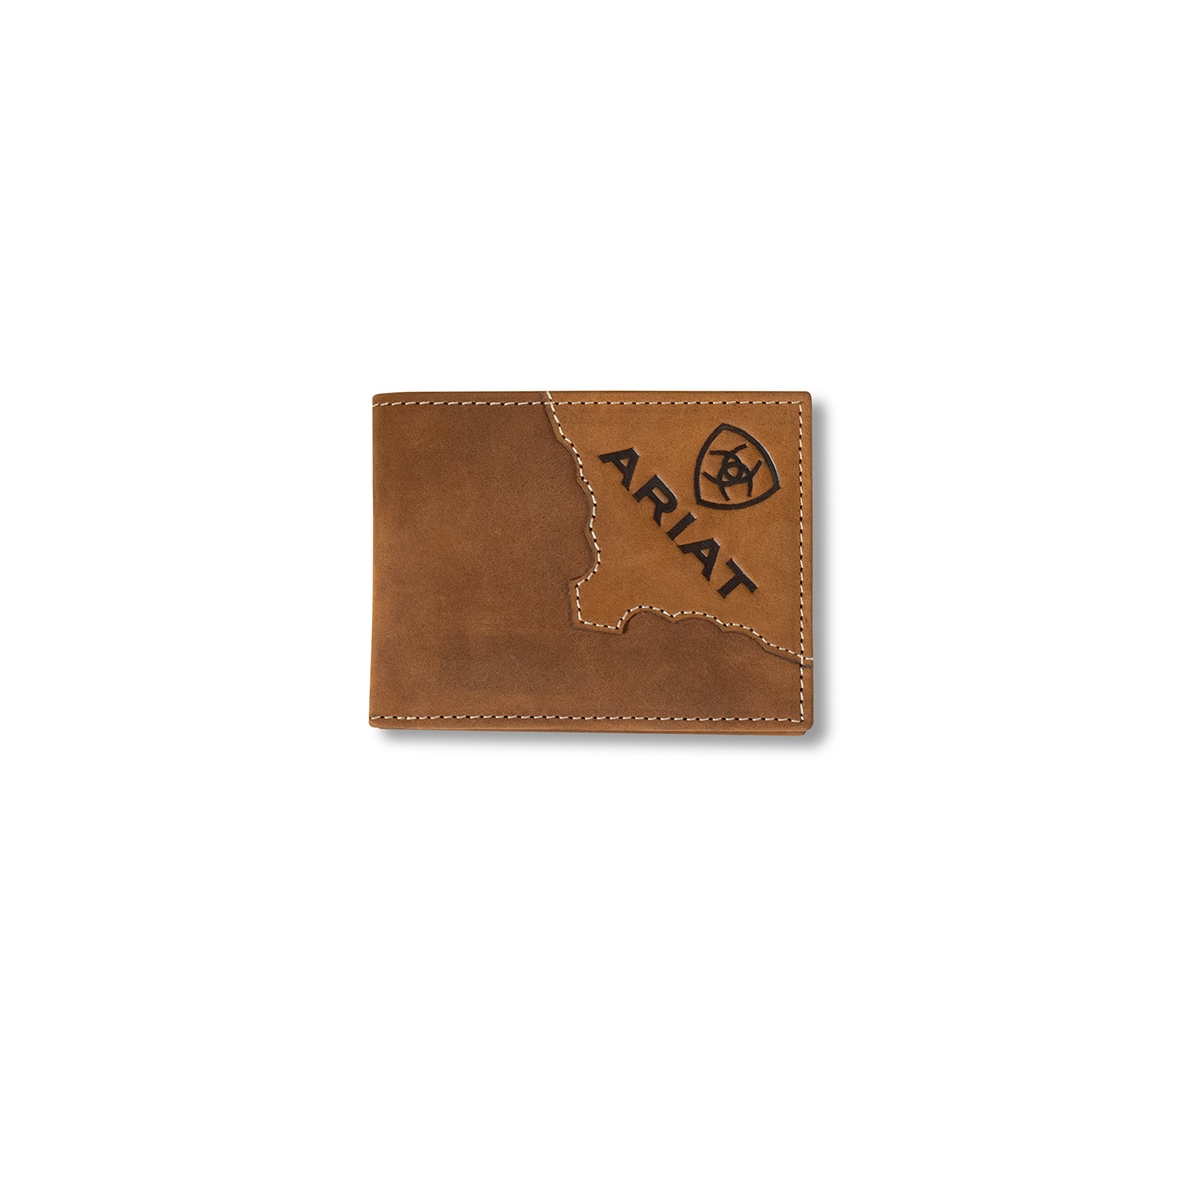 Ariat Bifold Wallet - Medium Brown 2 Tone Leather